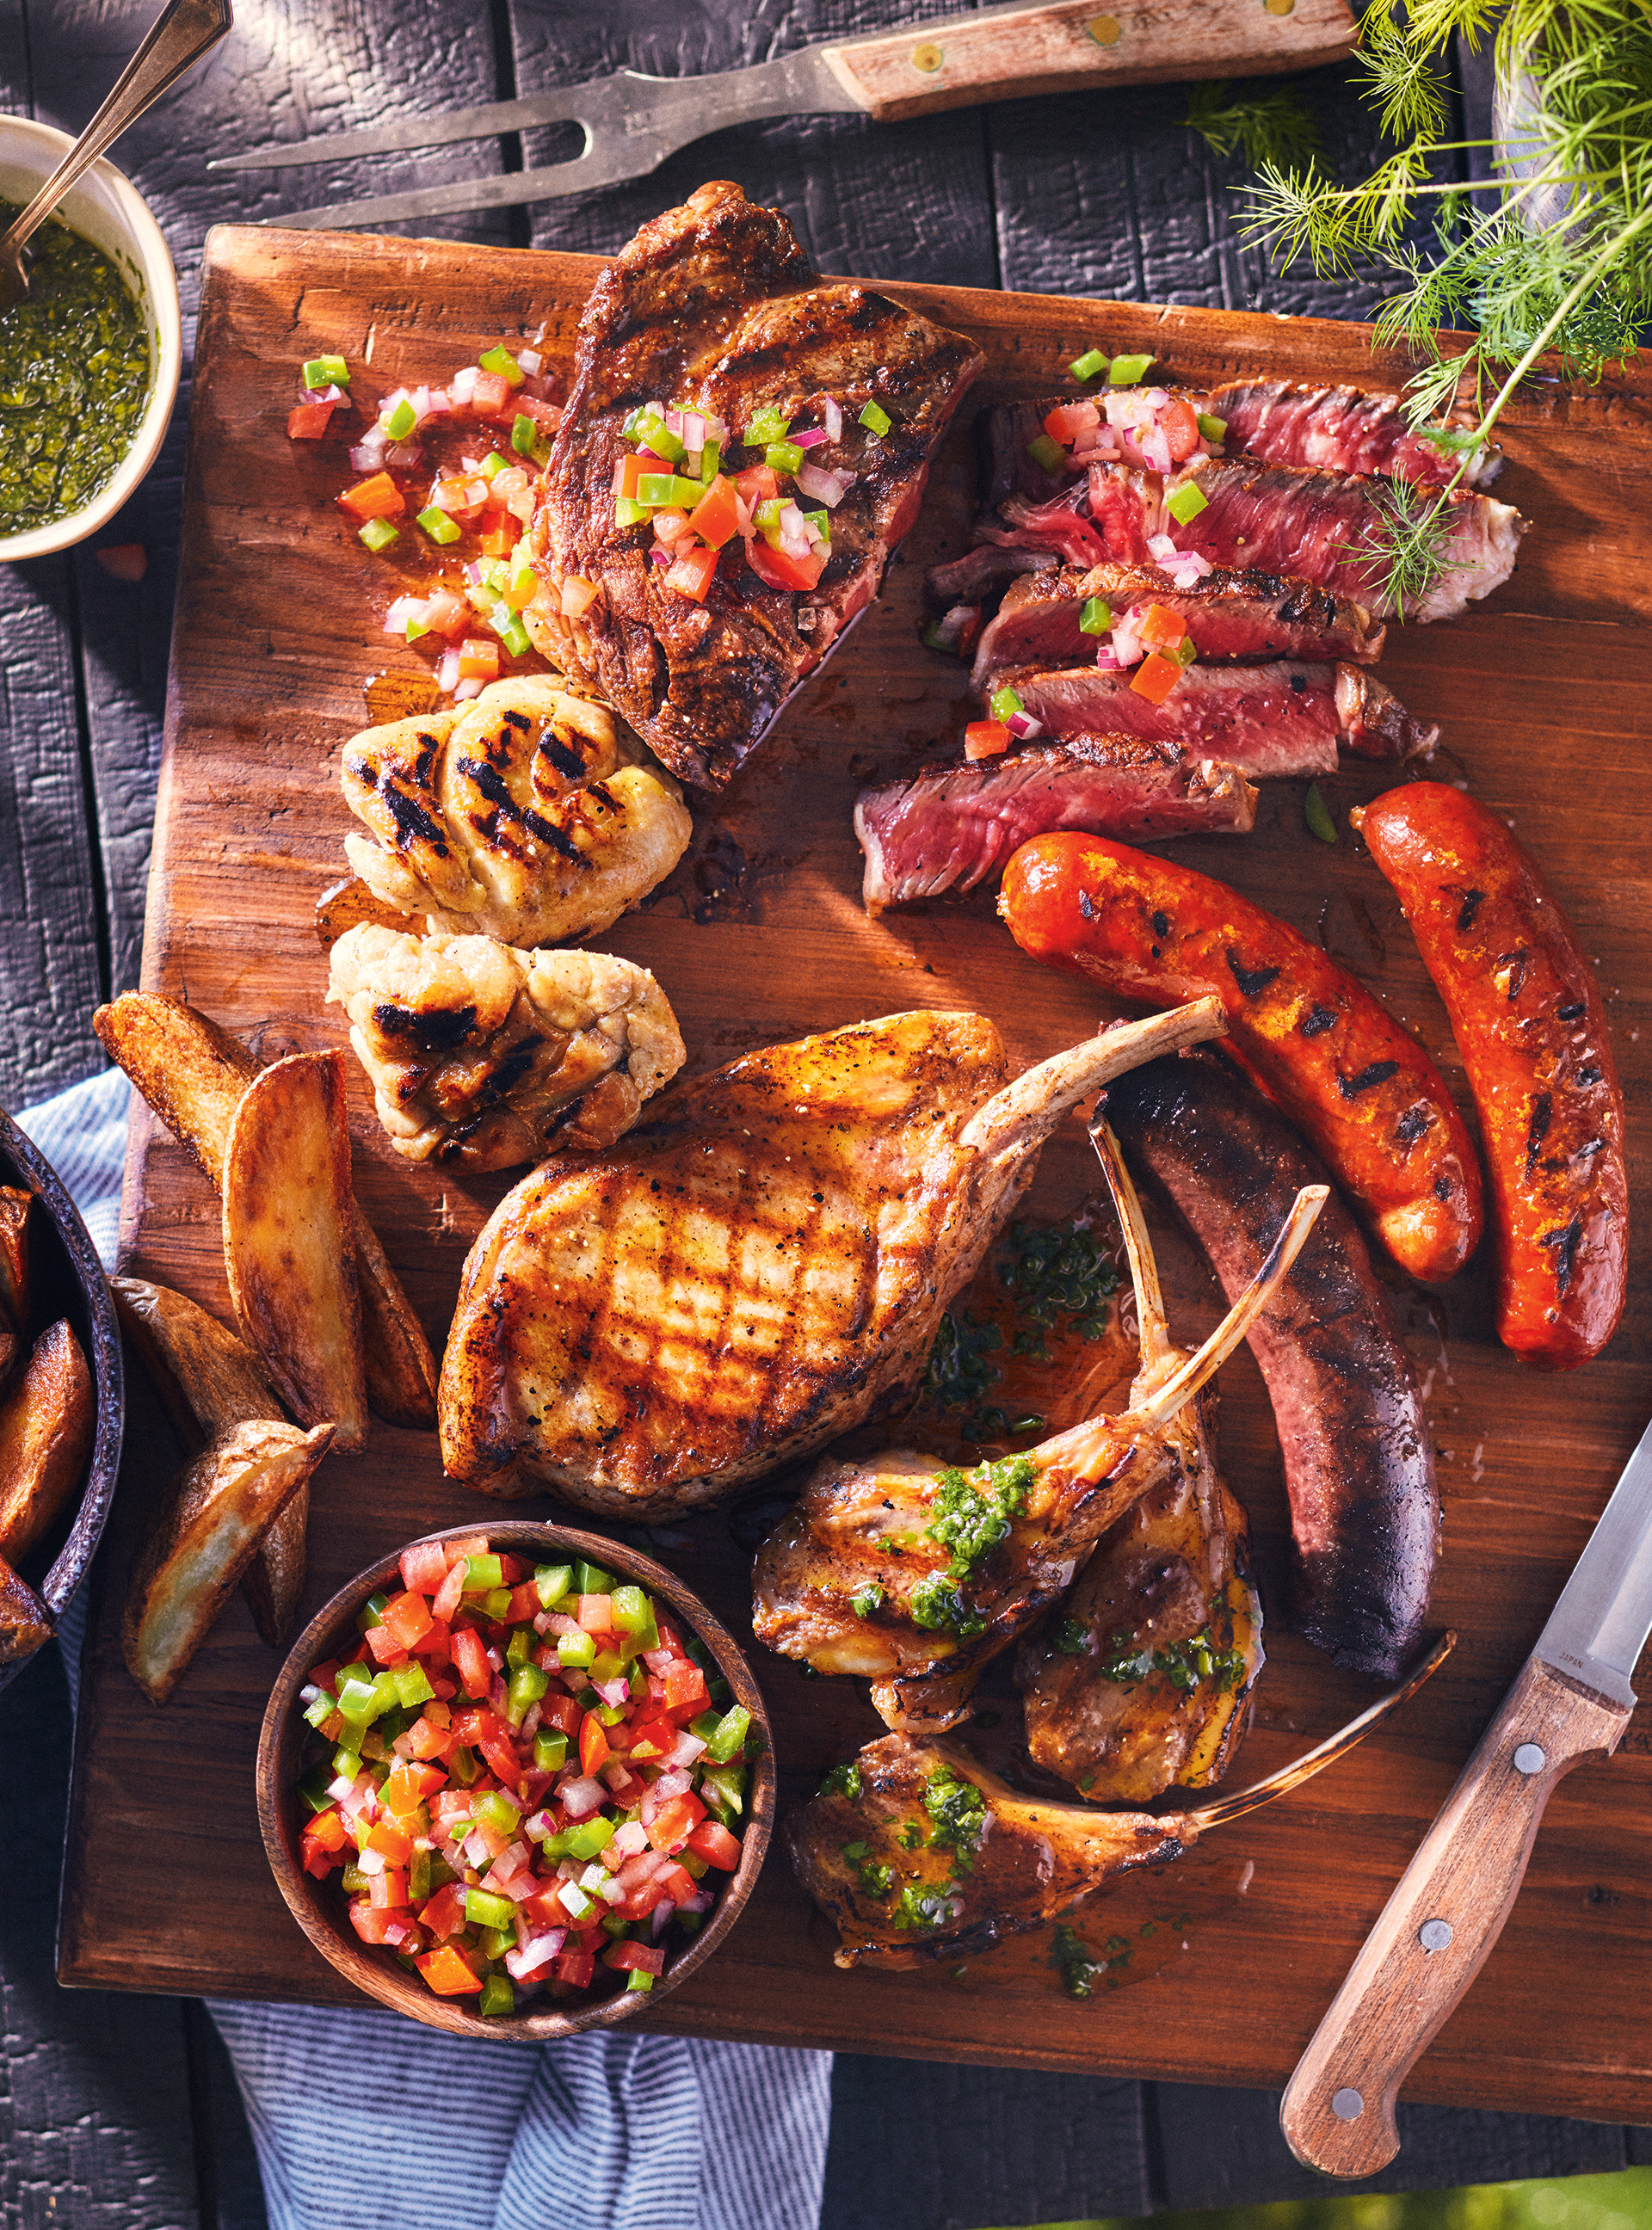 Argentinean Grilled Meat Platter (Parilla)